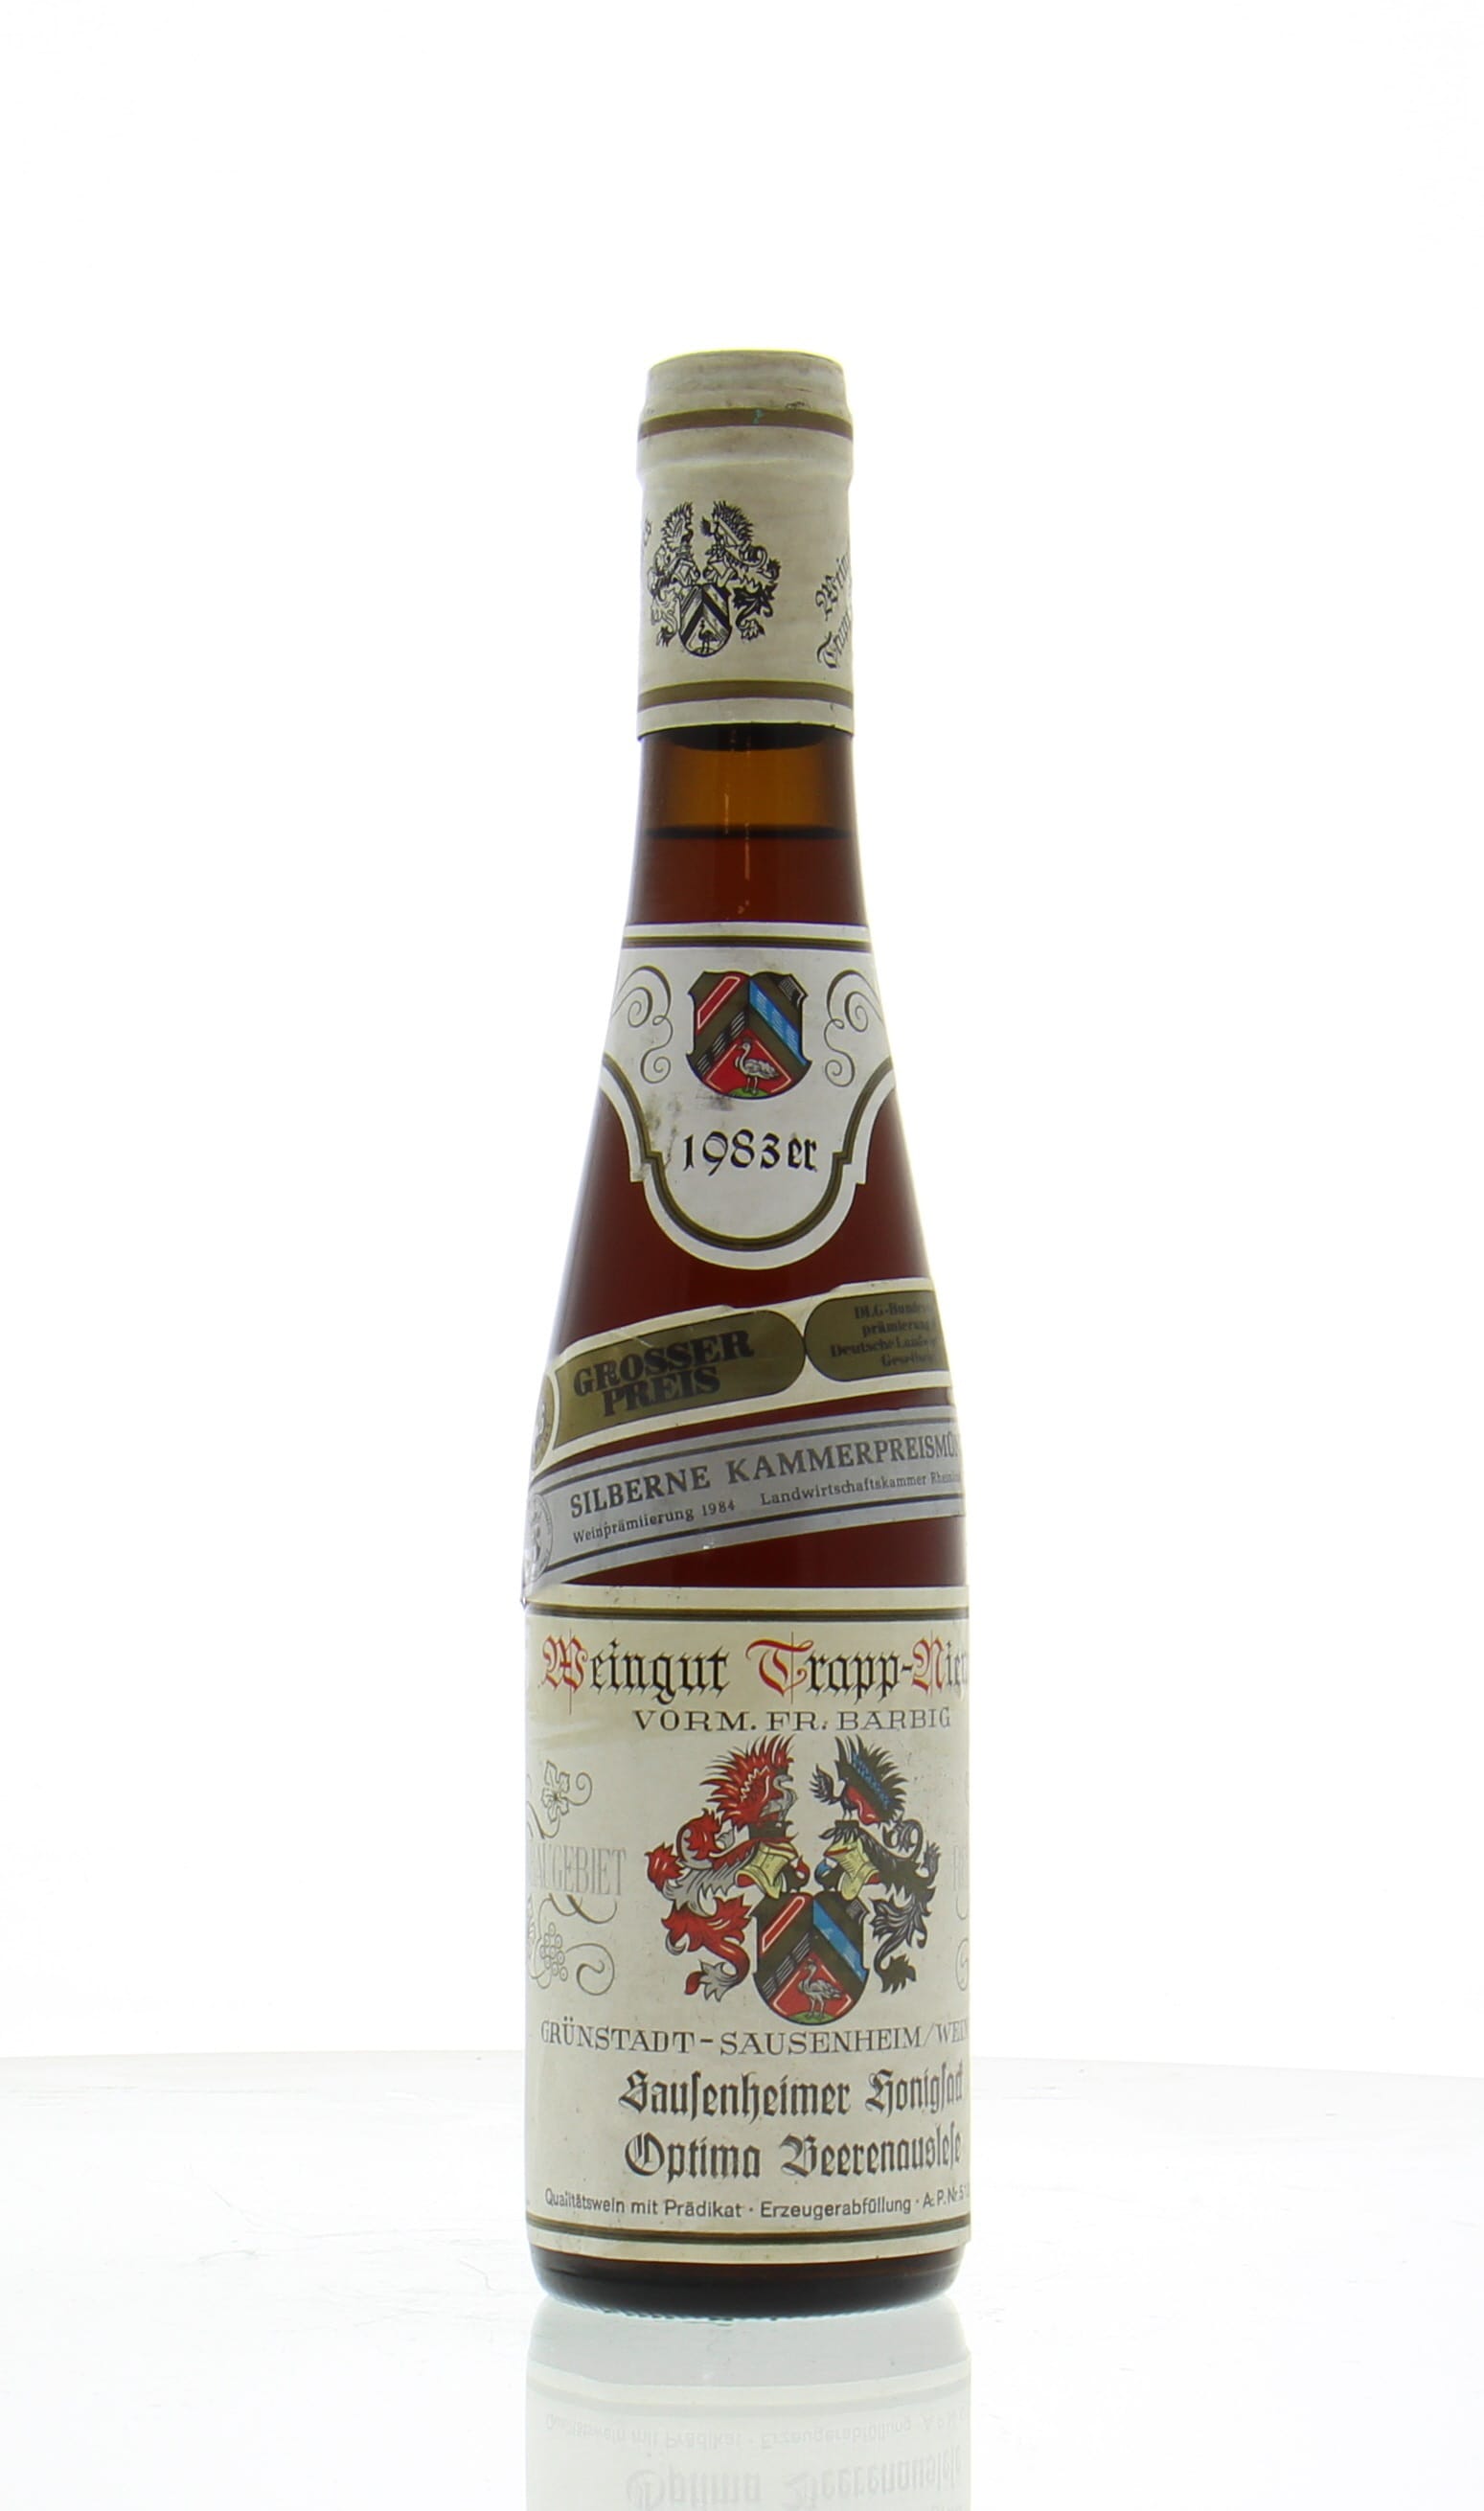 Weingut Trapp-Niemes - Sausenheimer Honinglad Optima Beerenauslese 1983 Perfect